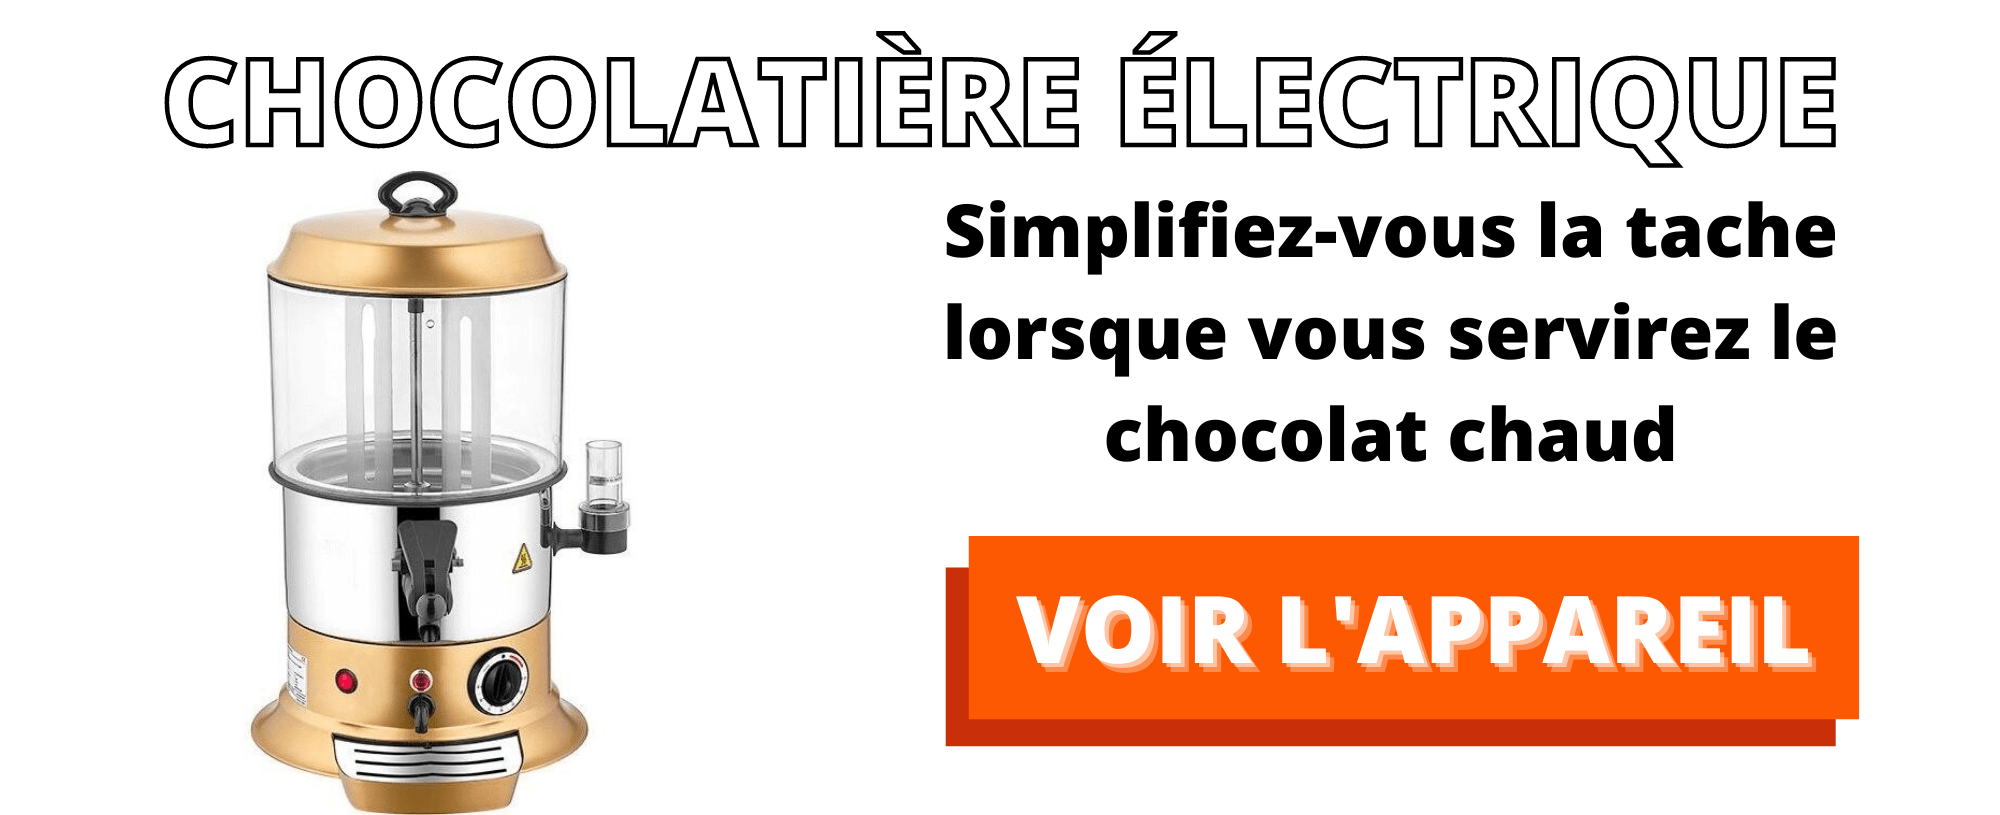 chocolatiere electrique